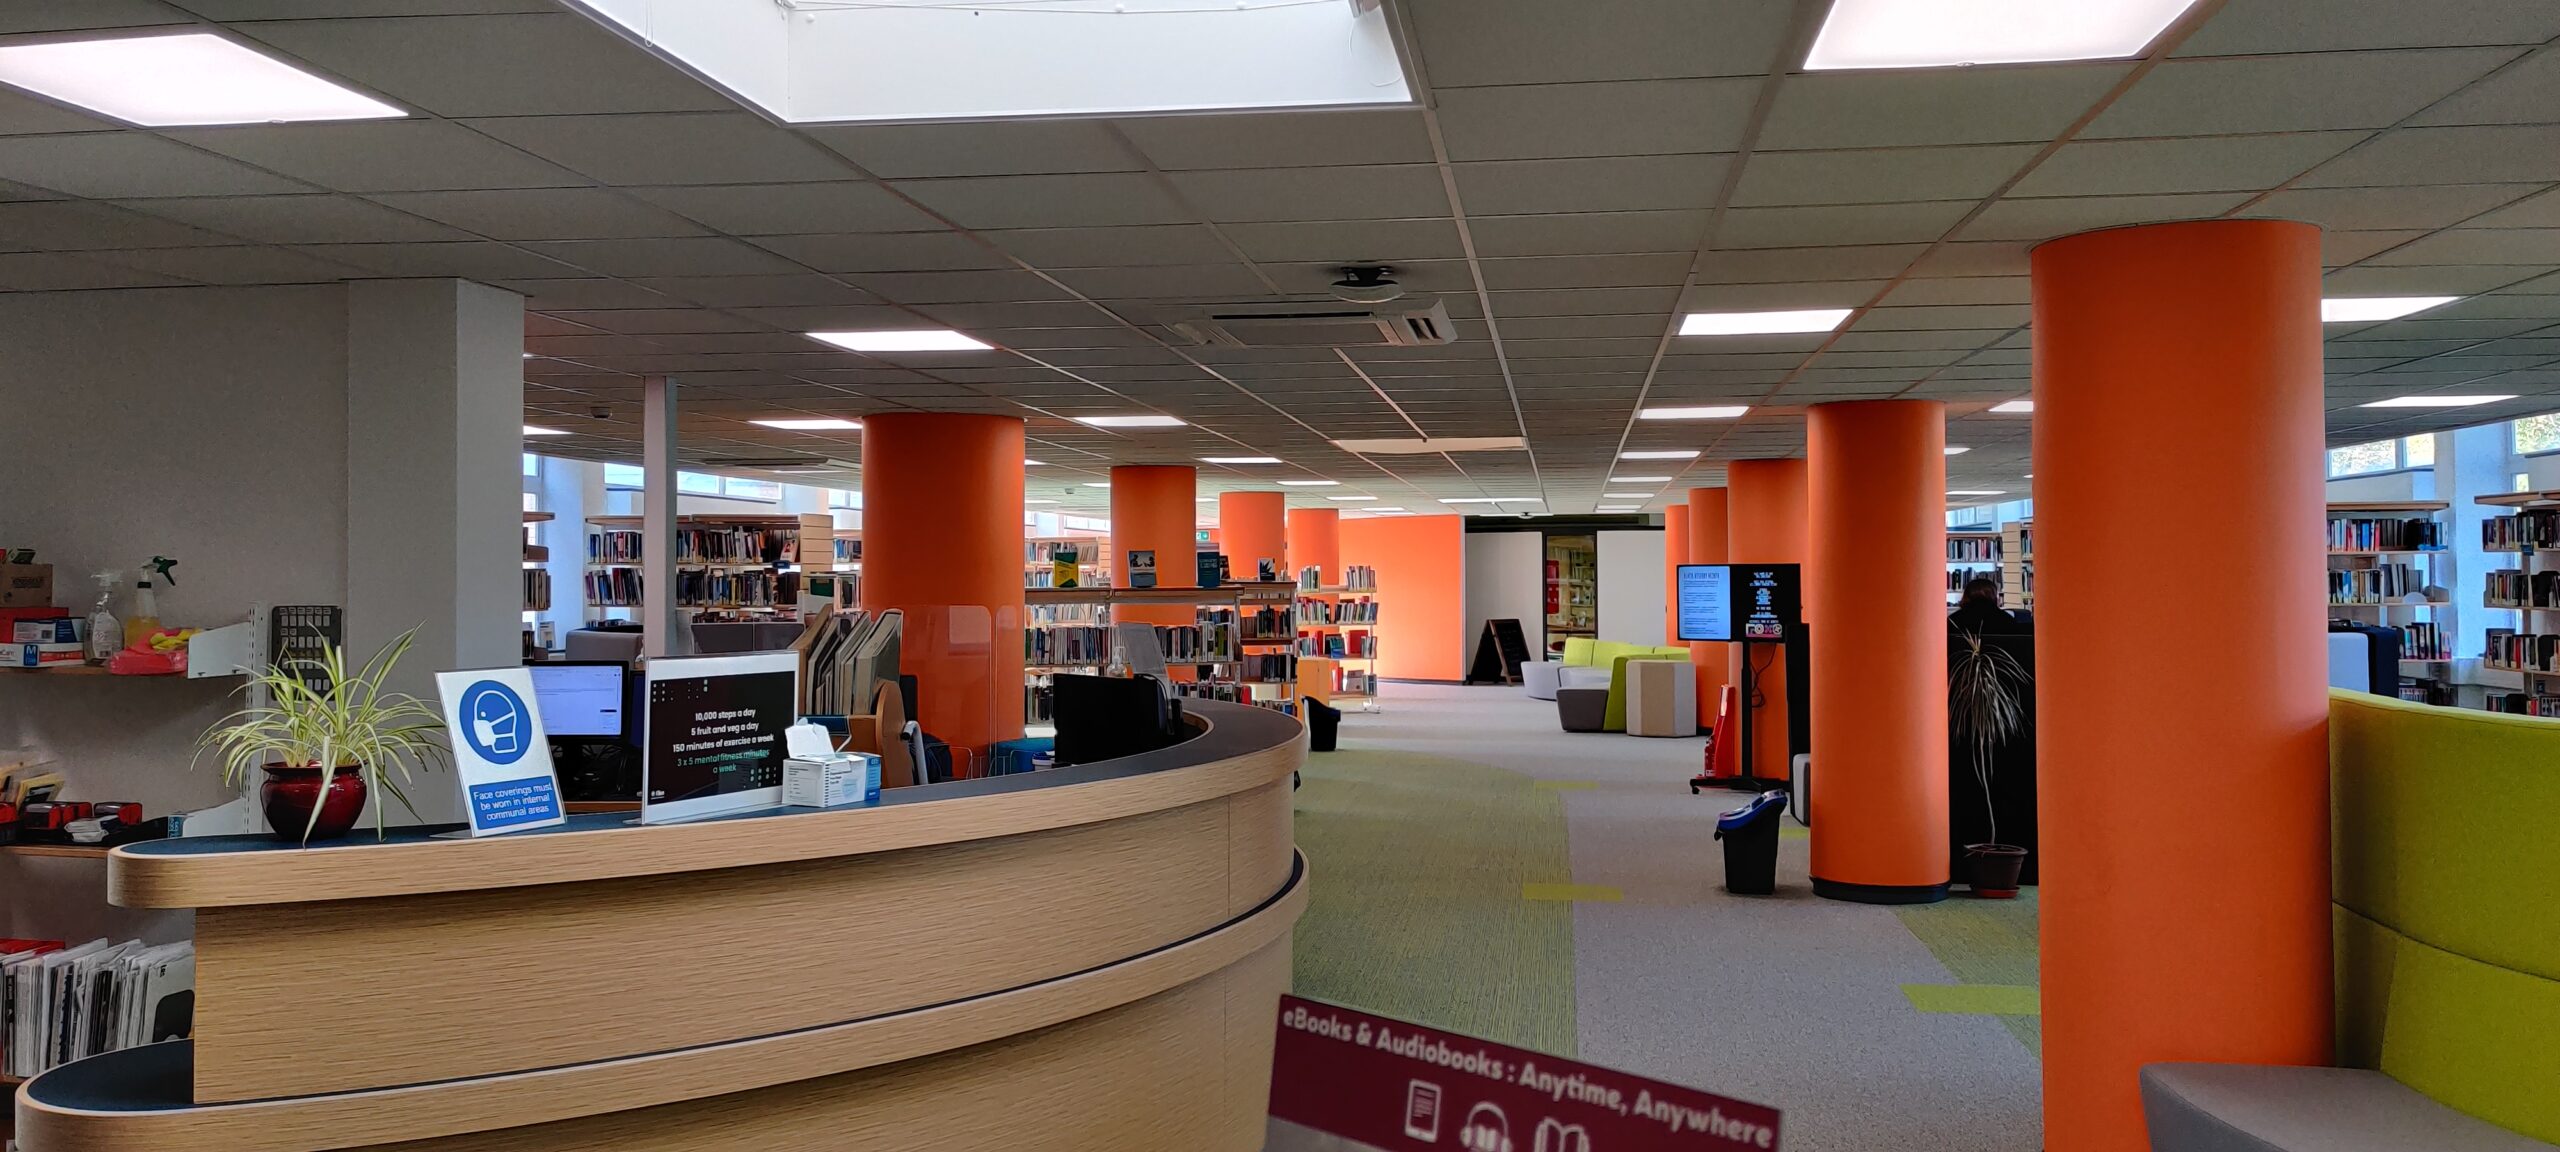 City College Plymouth Library/Digital Village Refurbishment